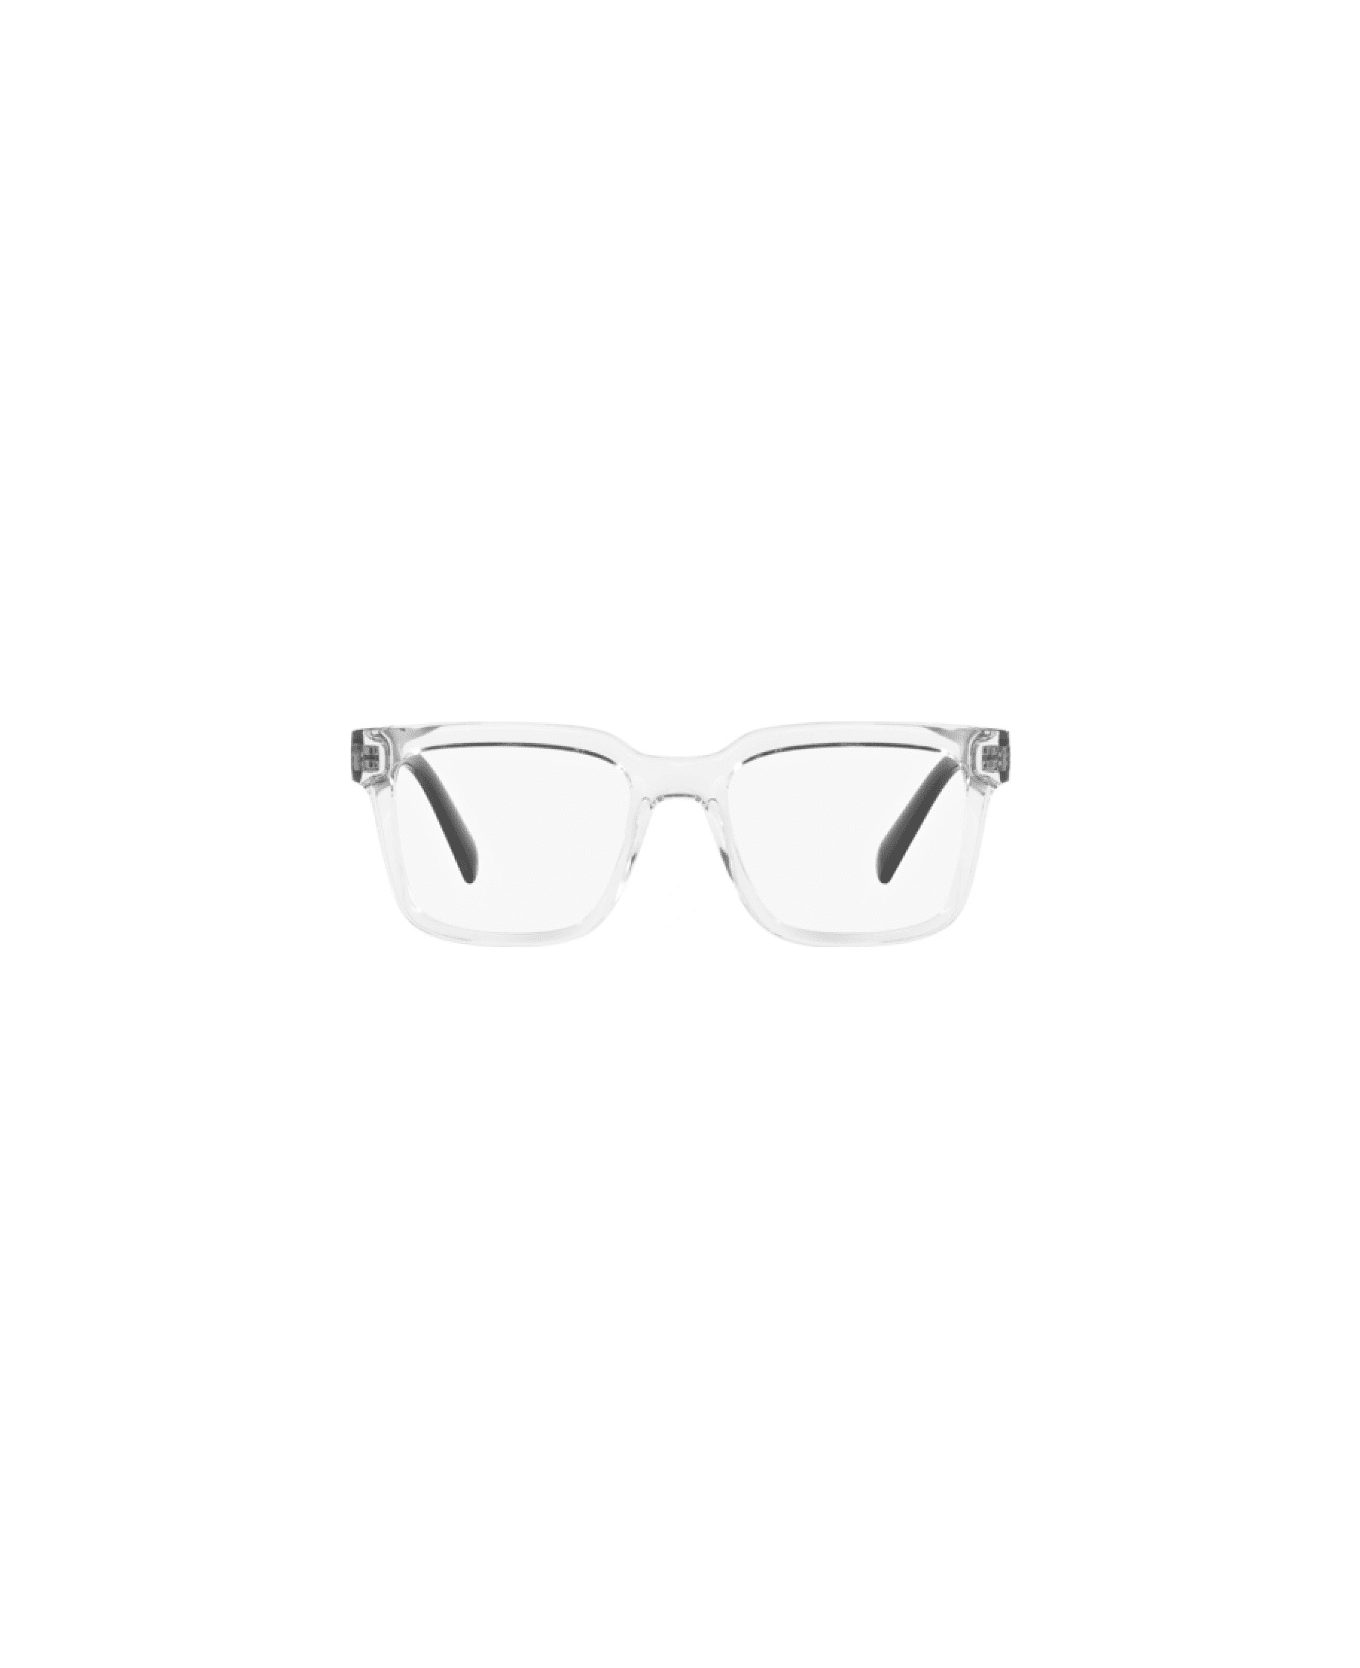 Dolce & Gabbana Eyewear DG5101 3133 Glasses - Trasparente e nero アイウェア